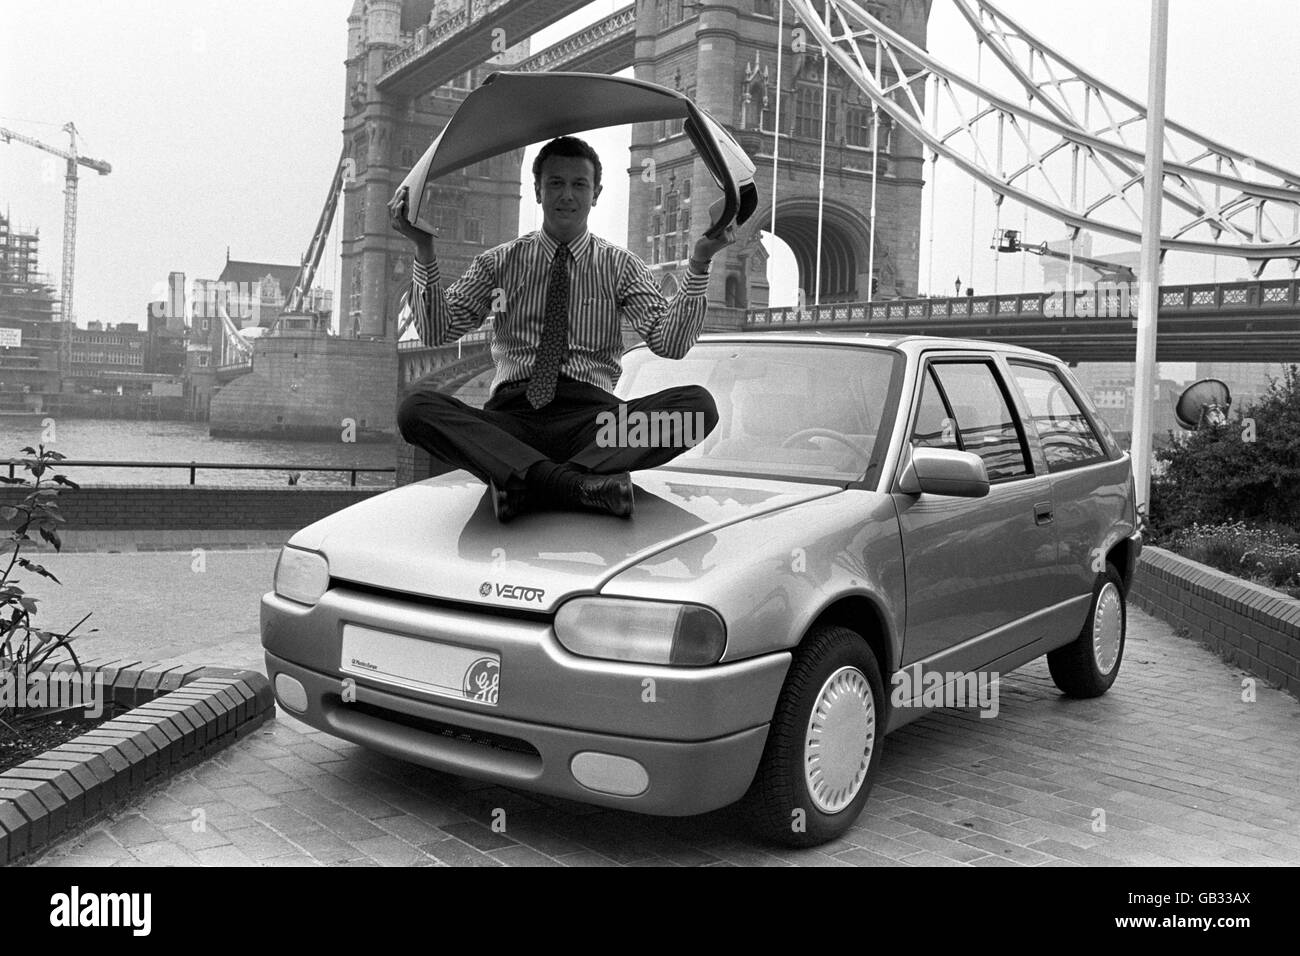 British Transport - routier - Cars - Prototypes - Londres - 1988 Banque D'Images